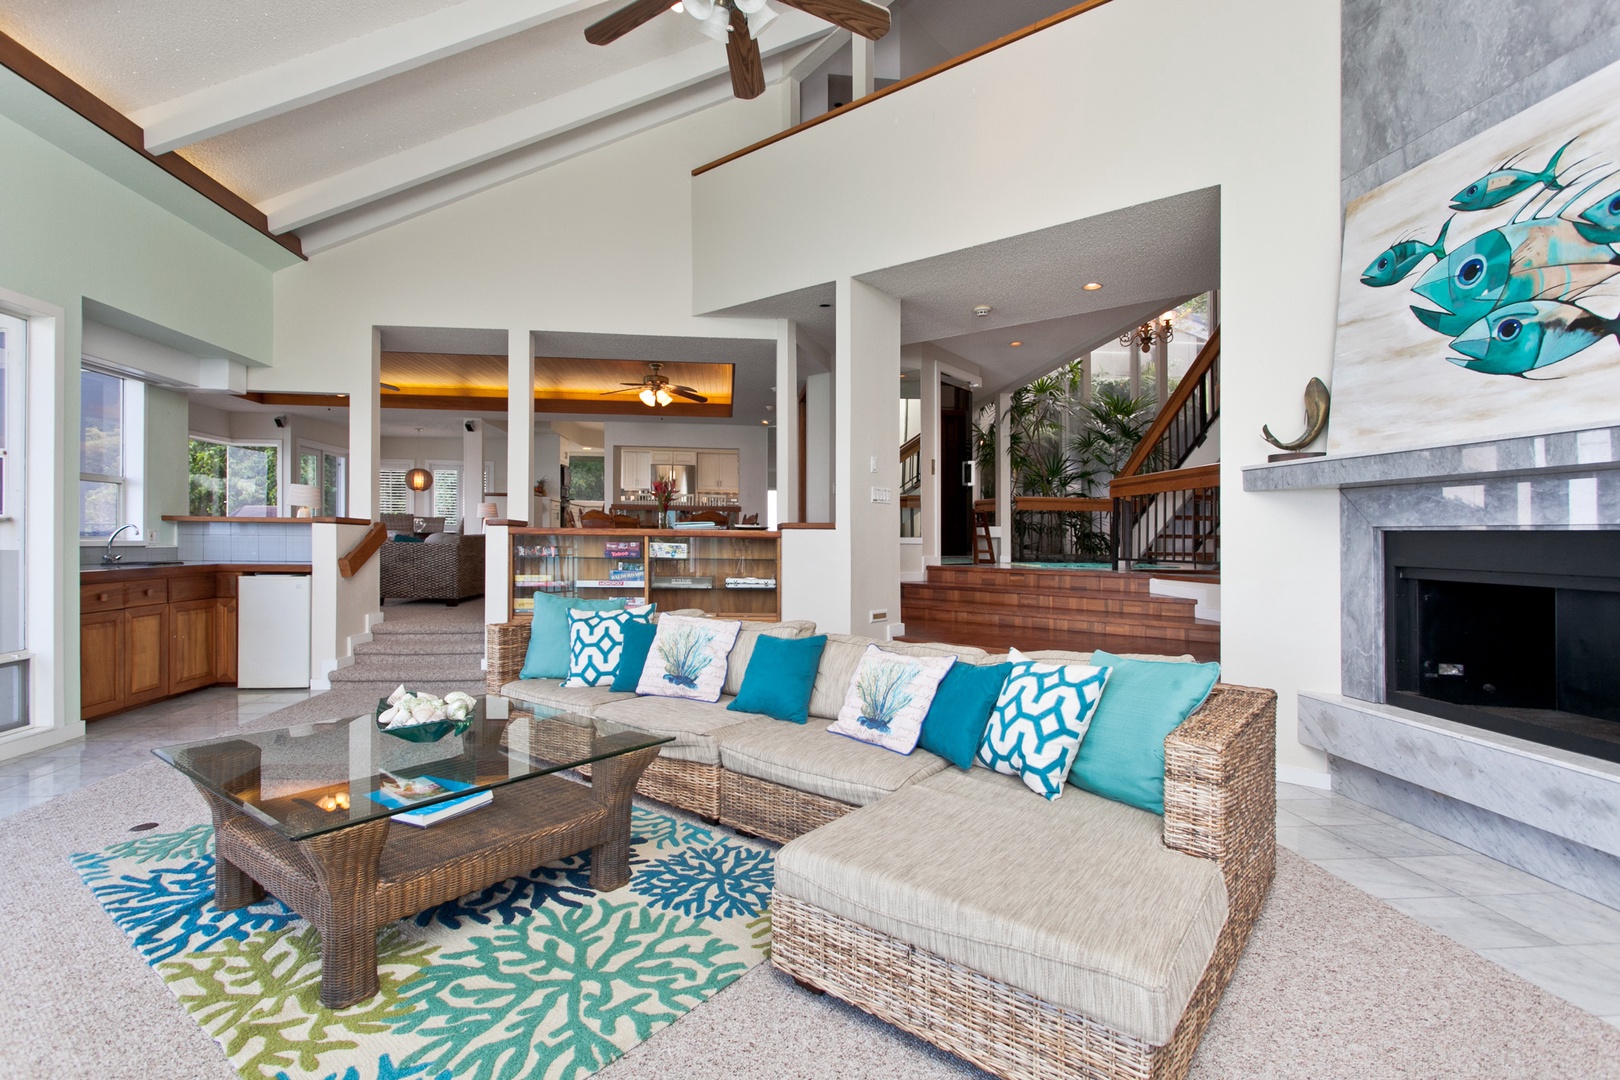 Kailua Vacation Rentals, Lanikai Village* - Hale Kolea: Open floorplan with large living area and plenty of seats.